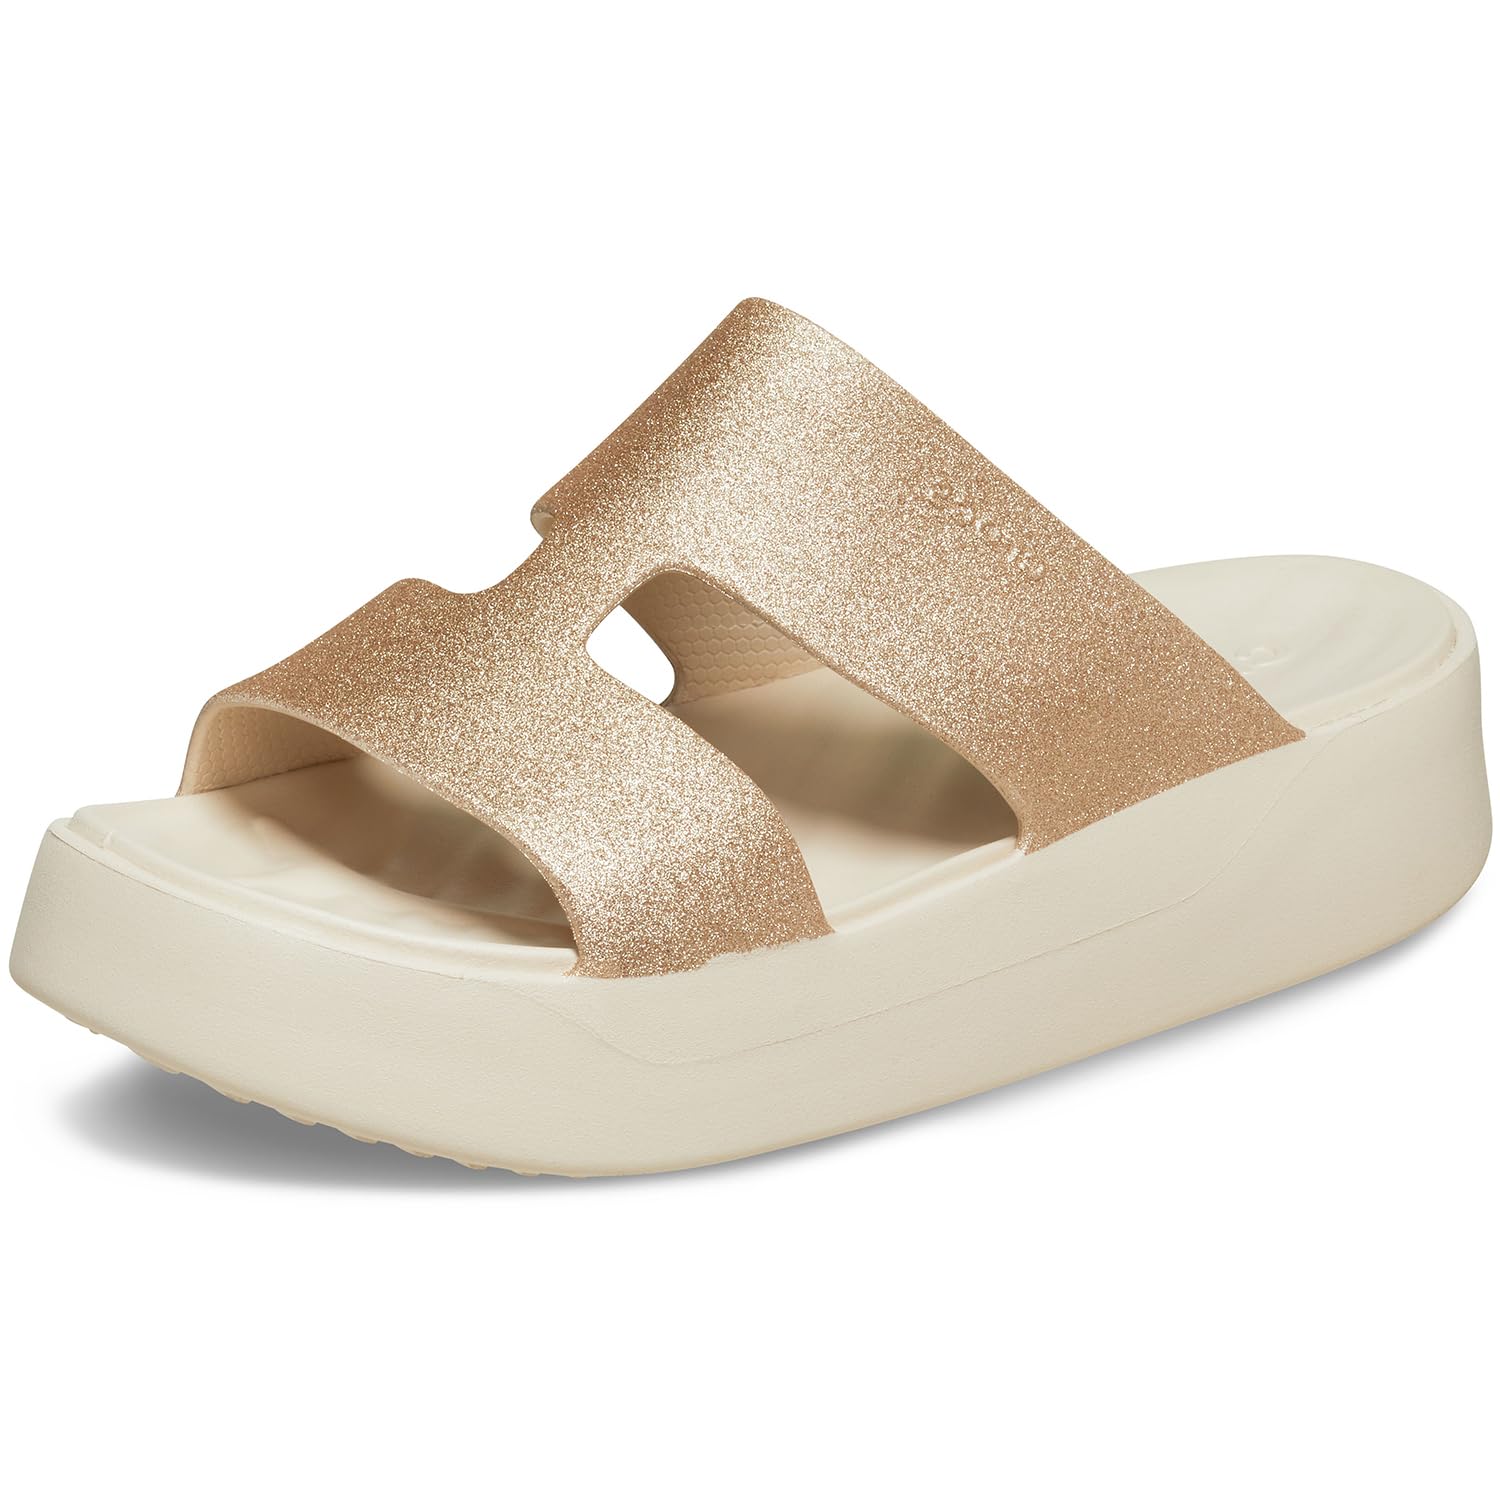 Crocs Getaway Platform H-Strap, Wedge Sandals for Women